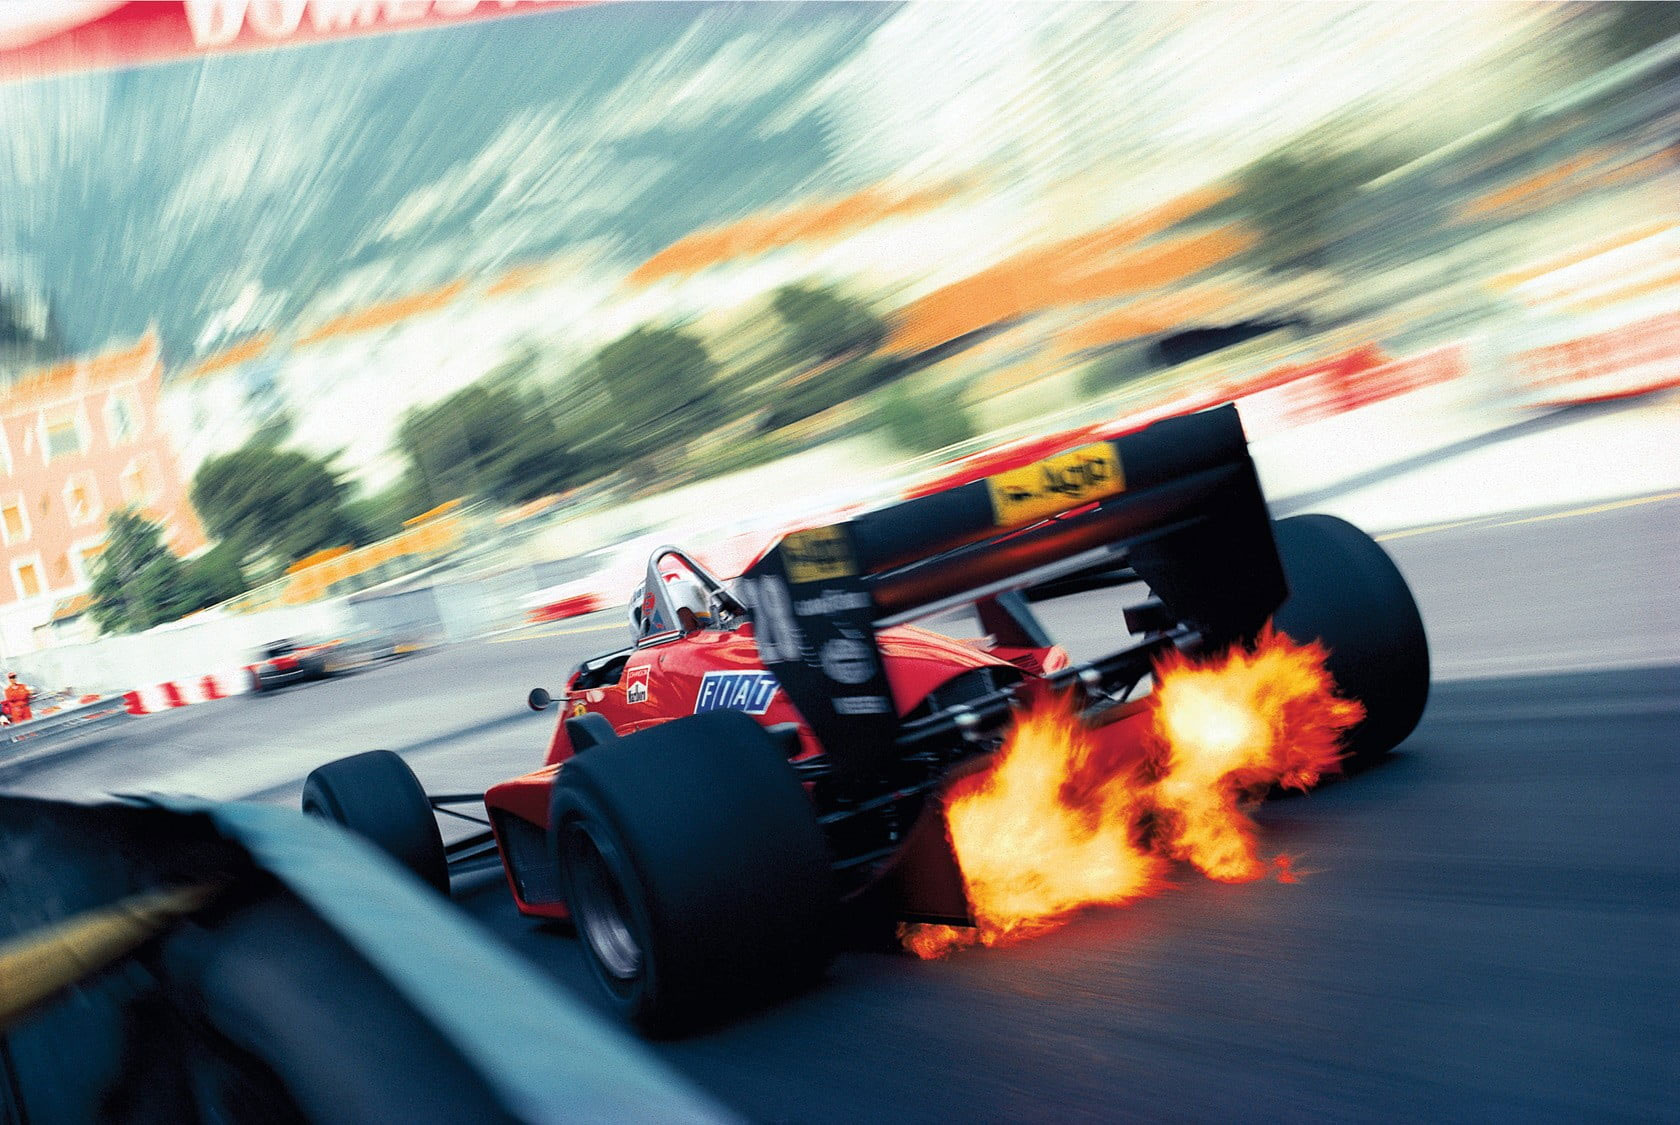 Red F1 race car wallpaper, racing, Ferrari, Monaco, long exposure, motorsports